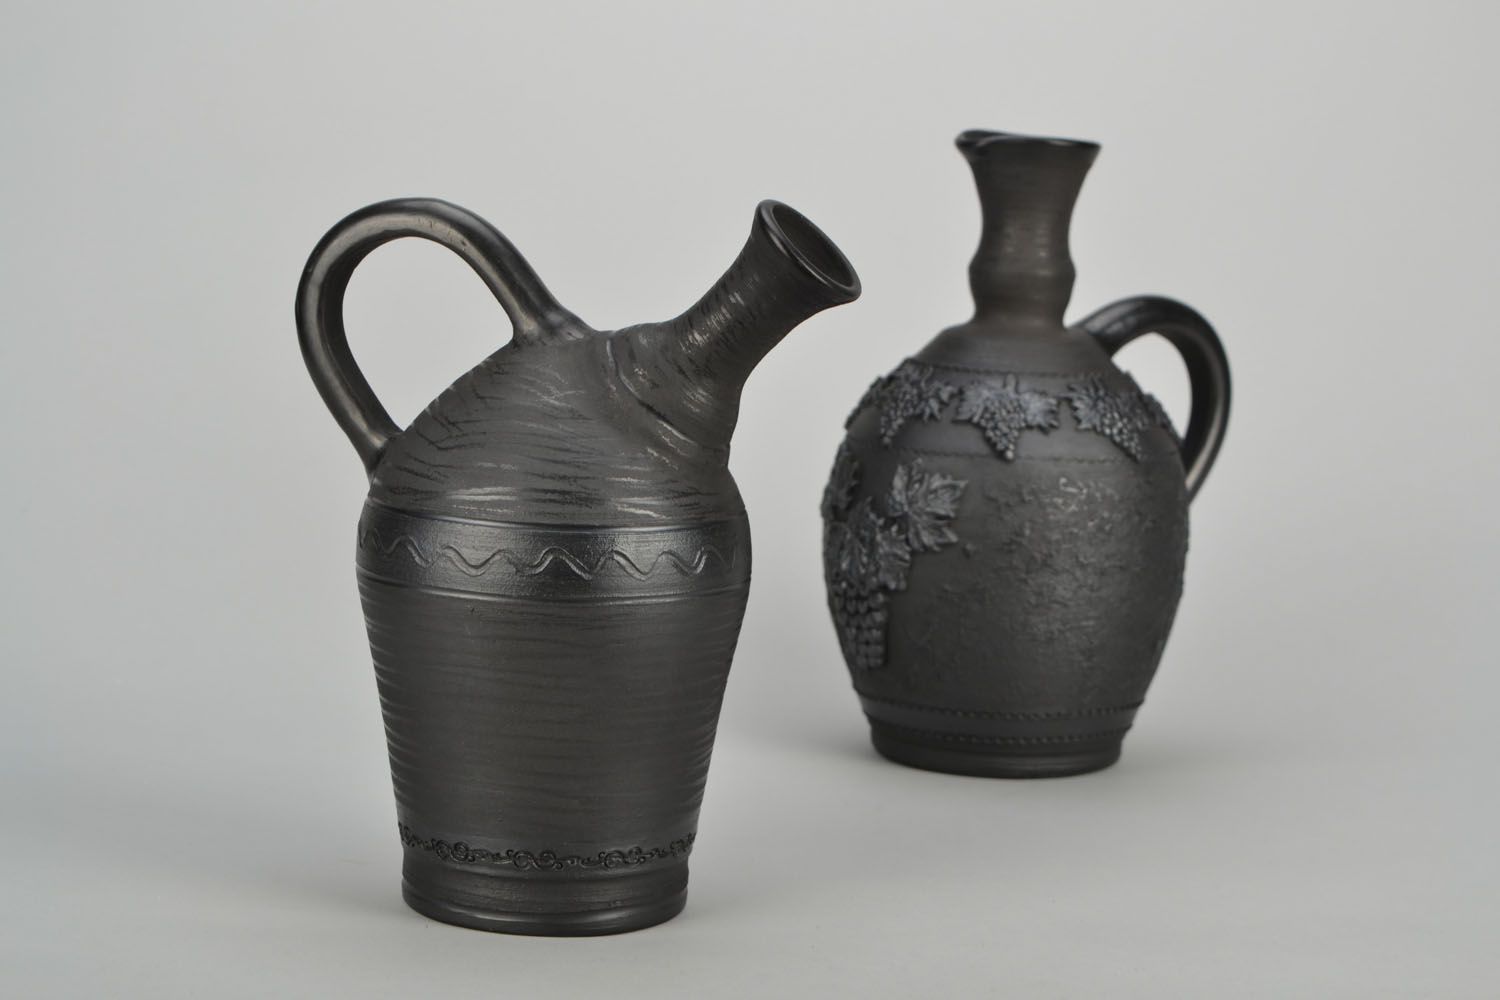 60 oz ceramic handmade wine jug made of black clay with handle in Greek amphora shape 1,7 lb photo 1